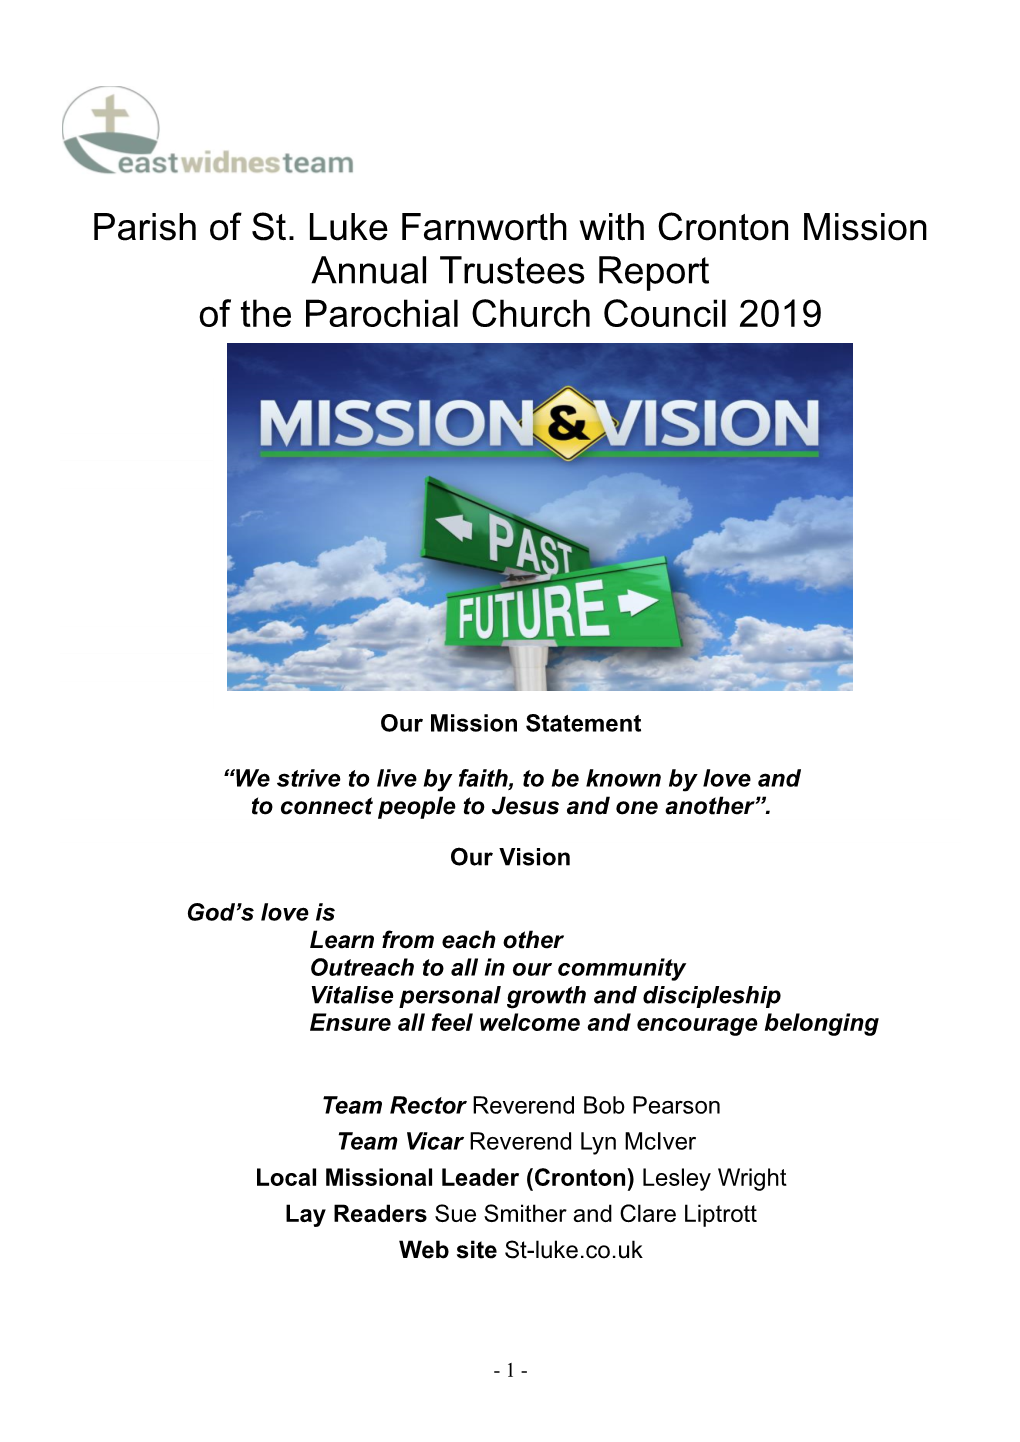 Parish of St. Luke Farnworth with Cronton Mission Annual Trustees Report of the Parochial Church Council 2019